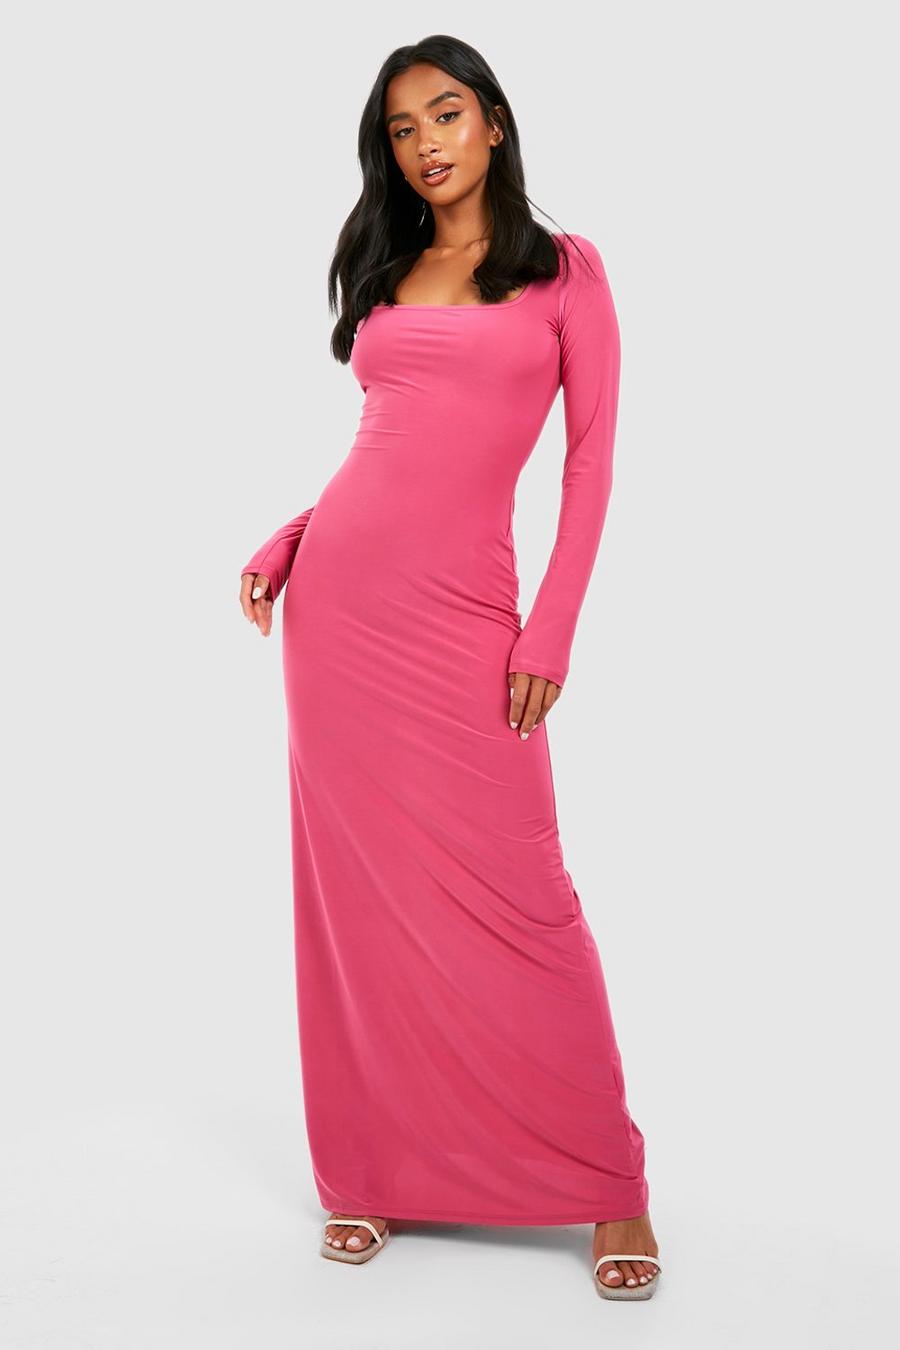 Hot pink Petite Long Sleeve Square Neck Slinky Maxi Dress